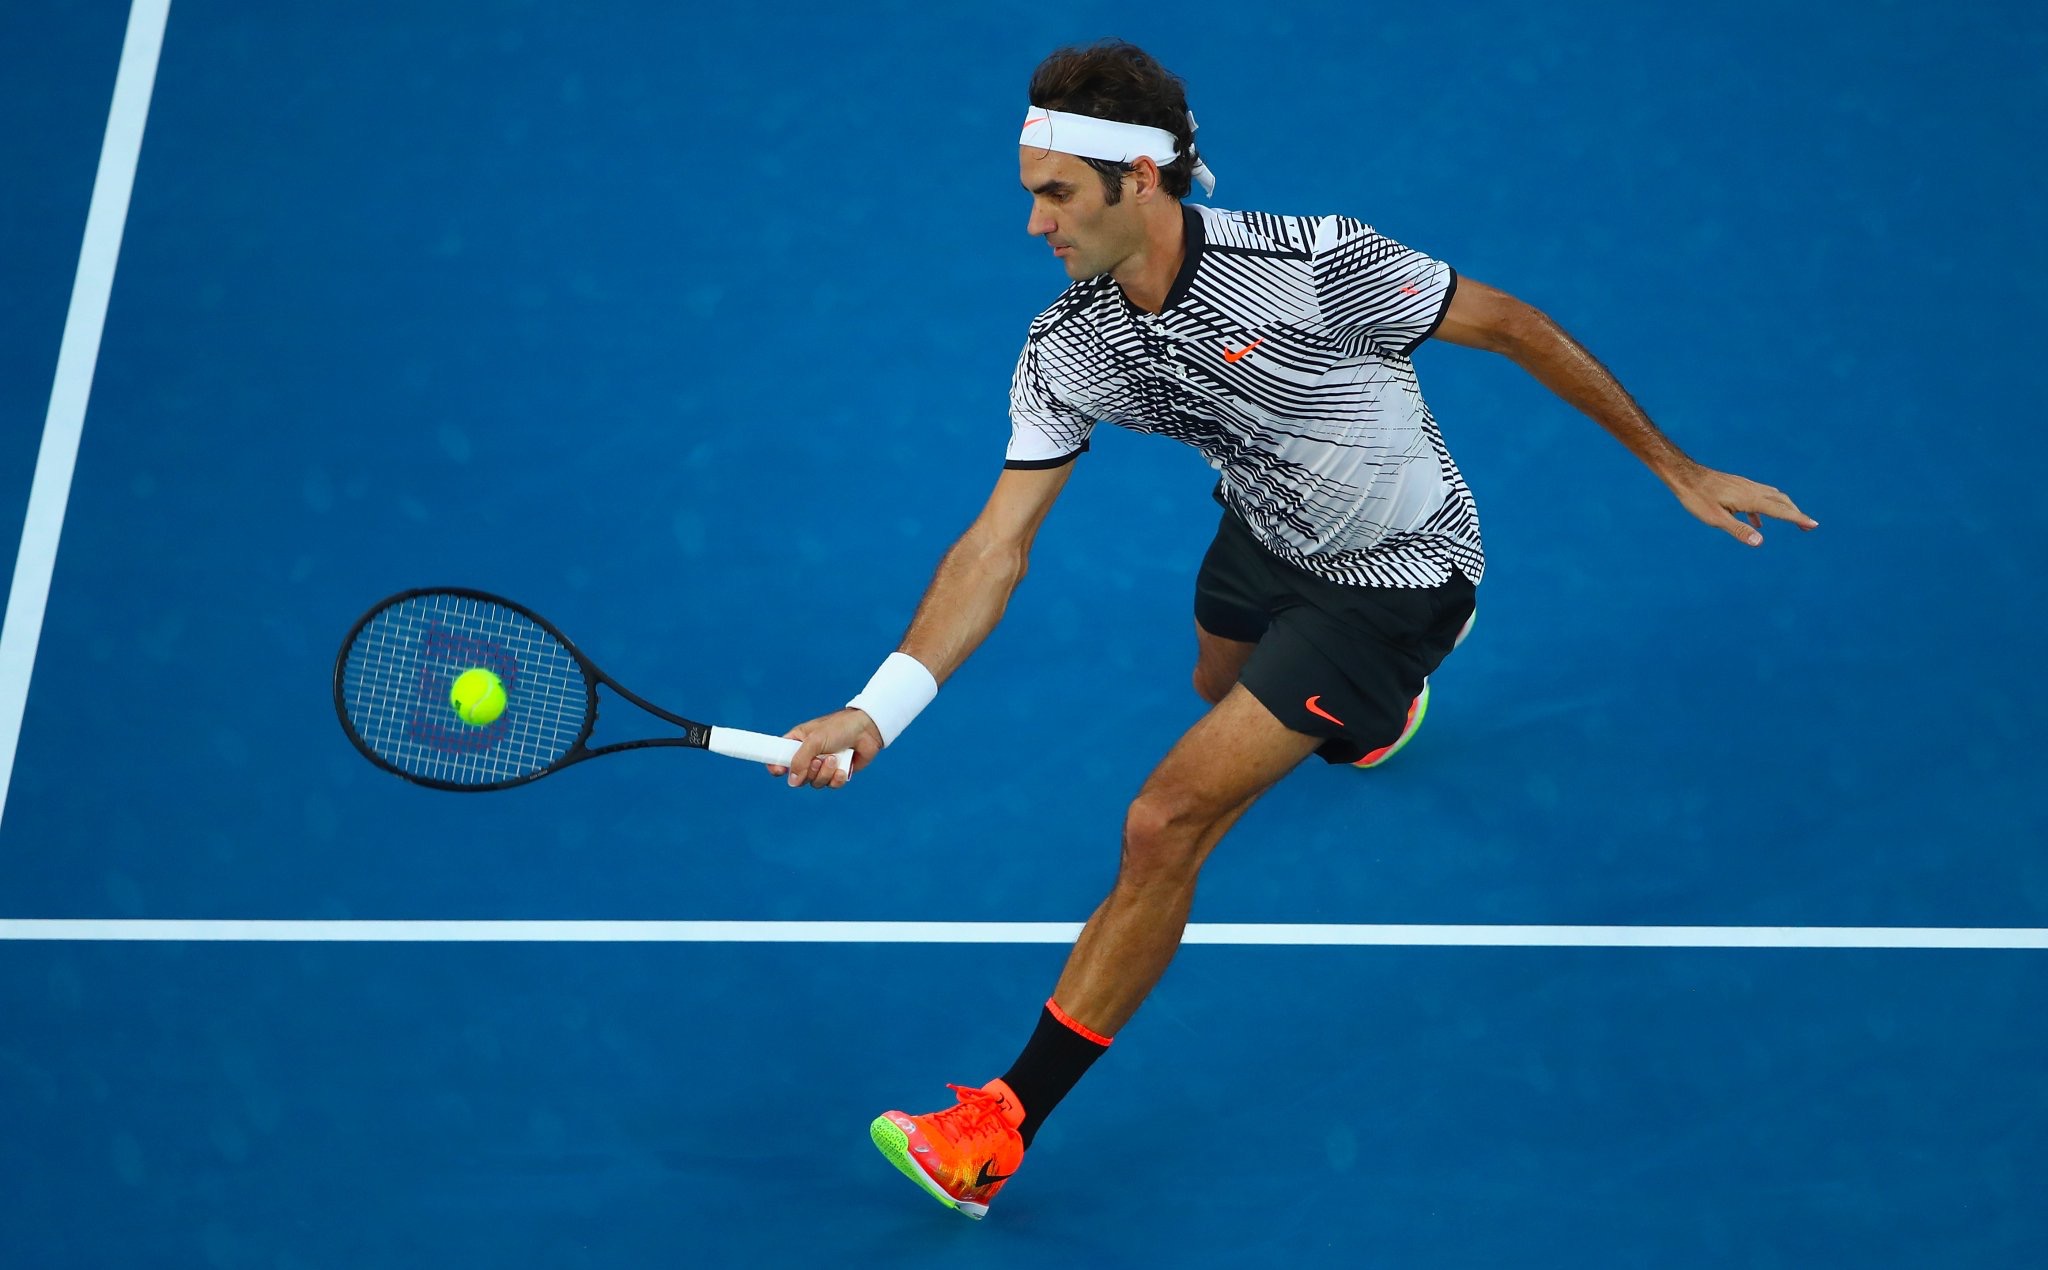 Federer Defeats Nishikori in Five Sets at Australian Open